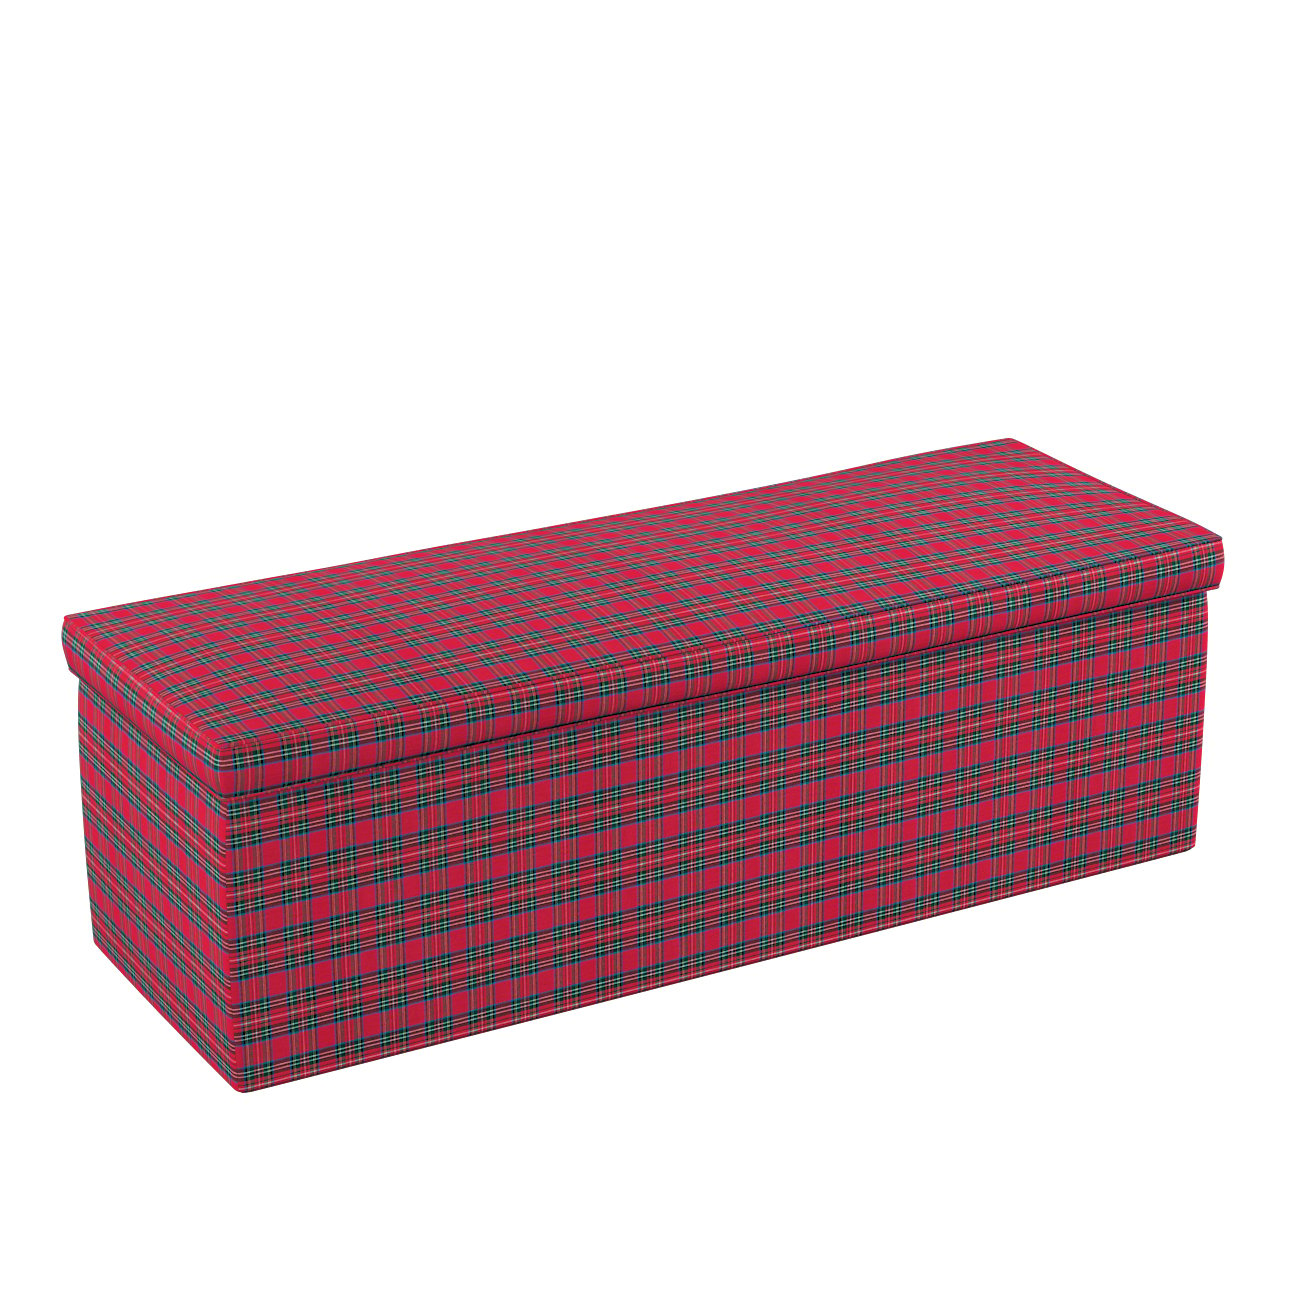 Dekoria Čalouněná skříň, kostka červená/zelená, 90 x 40 x 40 cm, Quadro, 126-29